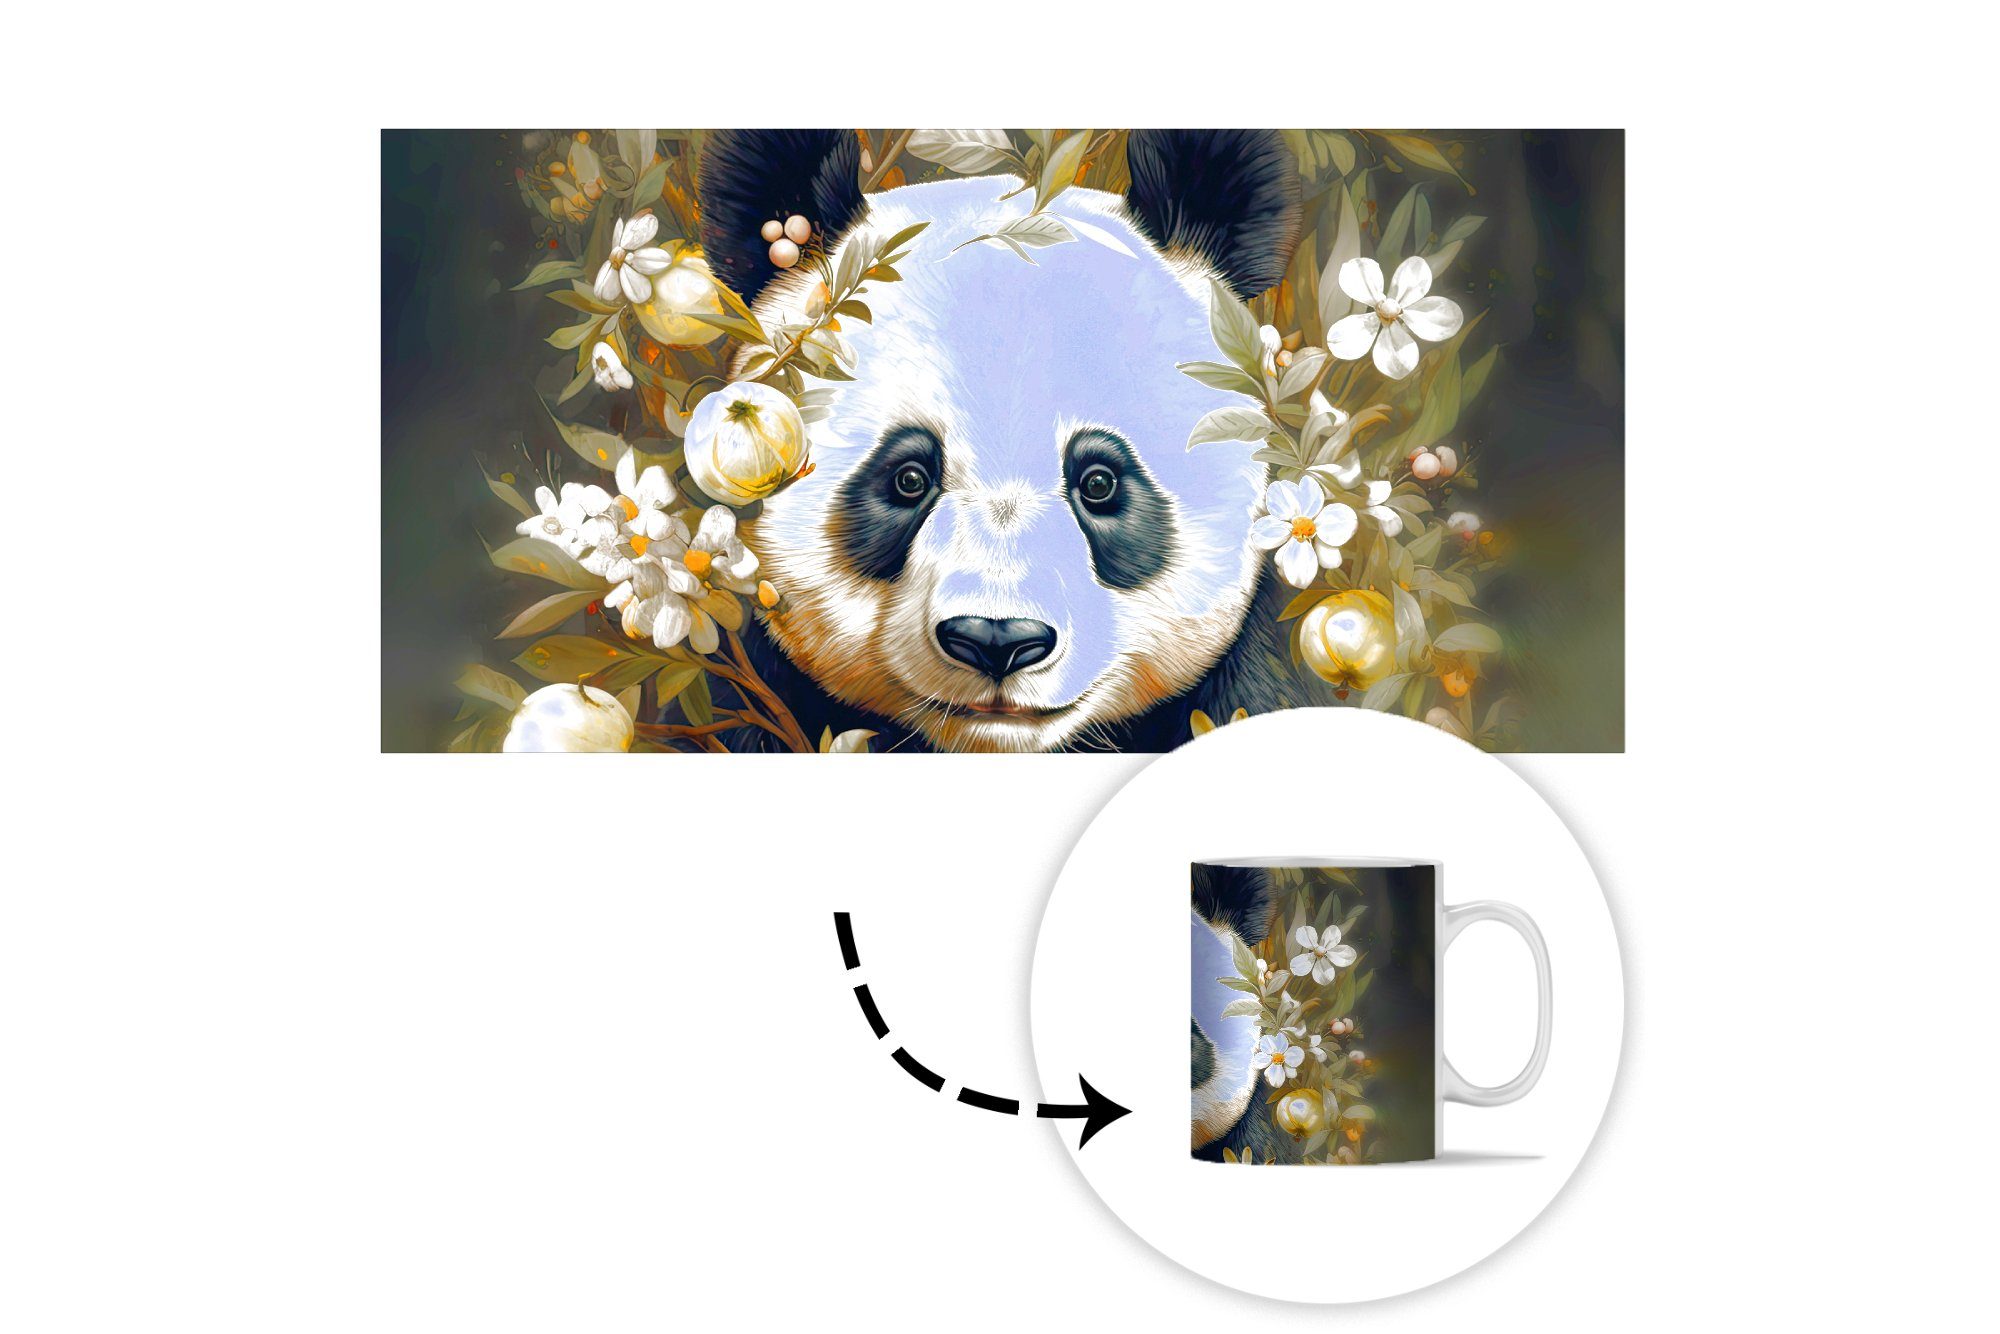 MuchoWow Tasse Panda - Pandabär Kaffeetassen, - Teetasse, Blumen, Geschenk Keramik, Teetasse, Wildtiere - Becher